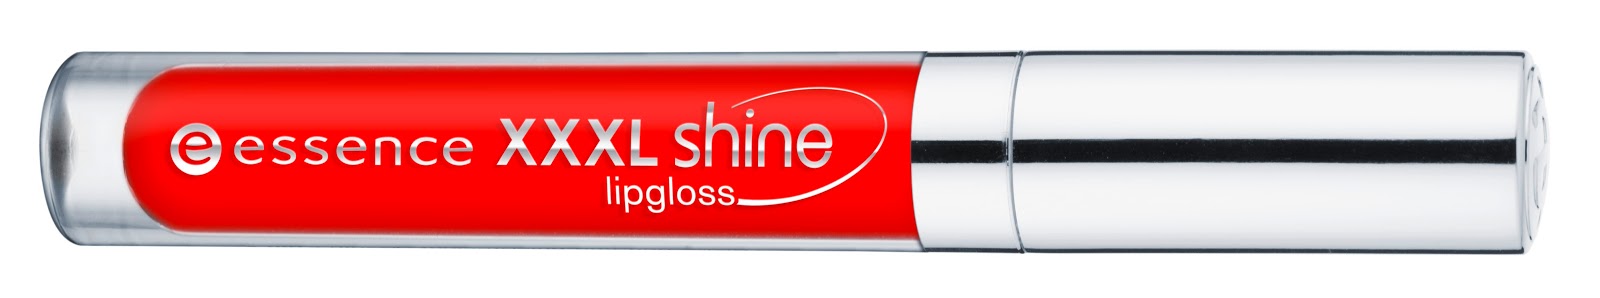 Essence XXXL shine lipgloss